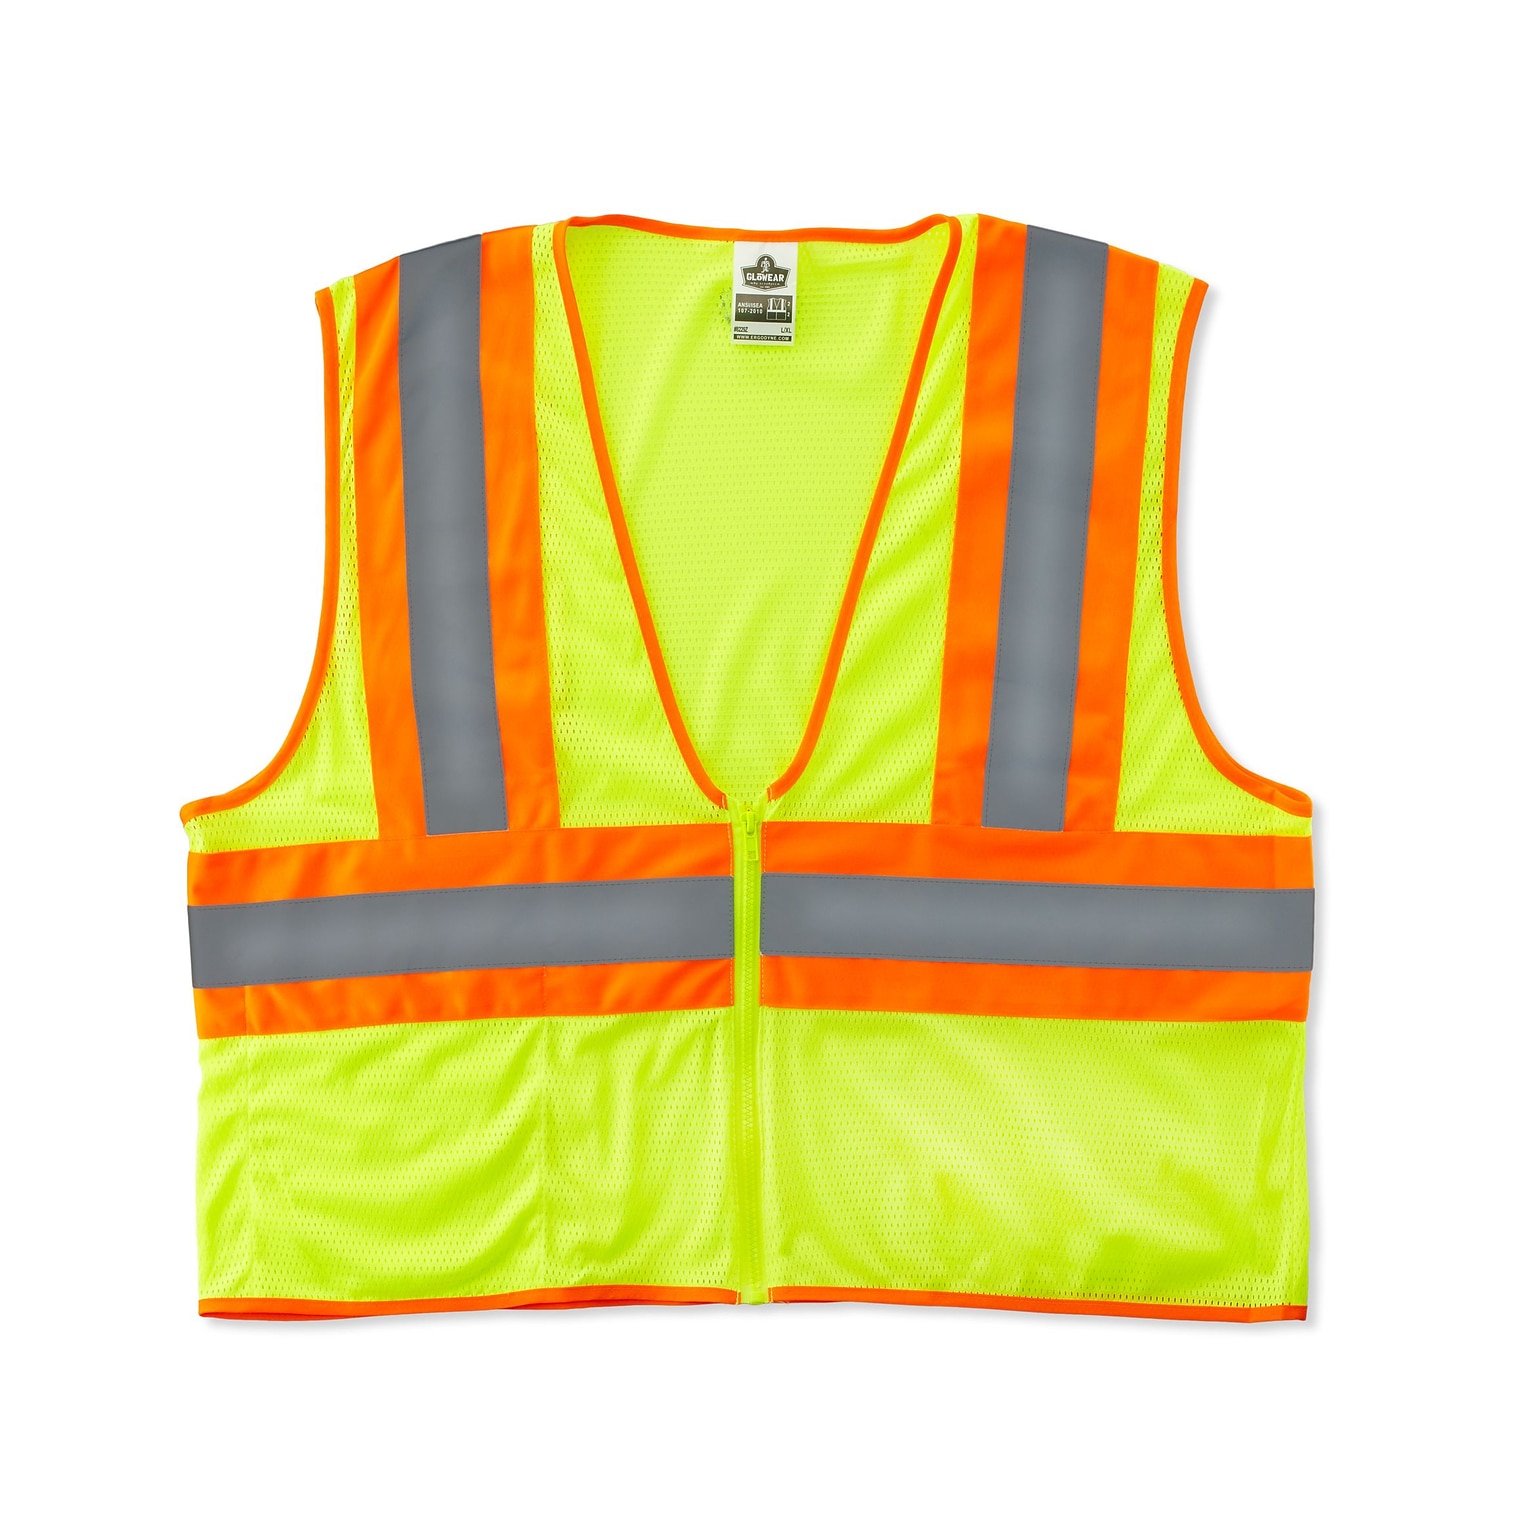 Ergodyne GloWear® 8229Z High Visibility Sleeveless Safety Vest, ANSI Class R2, Lime, 2XL/3XL (21297)